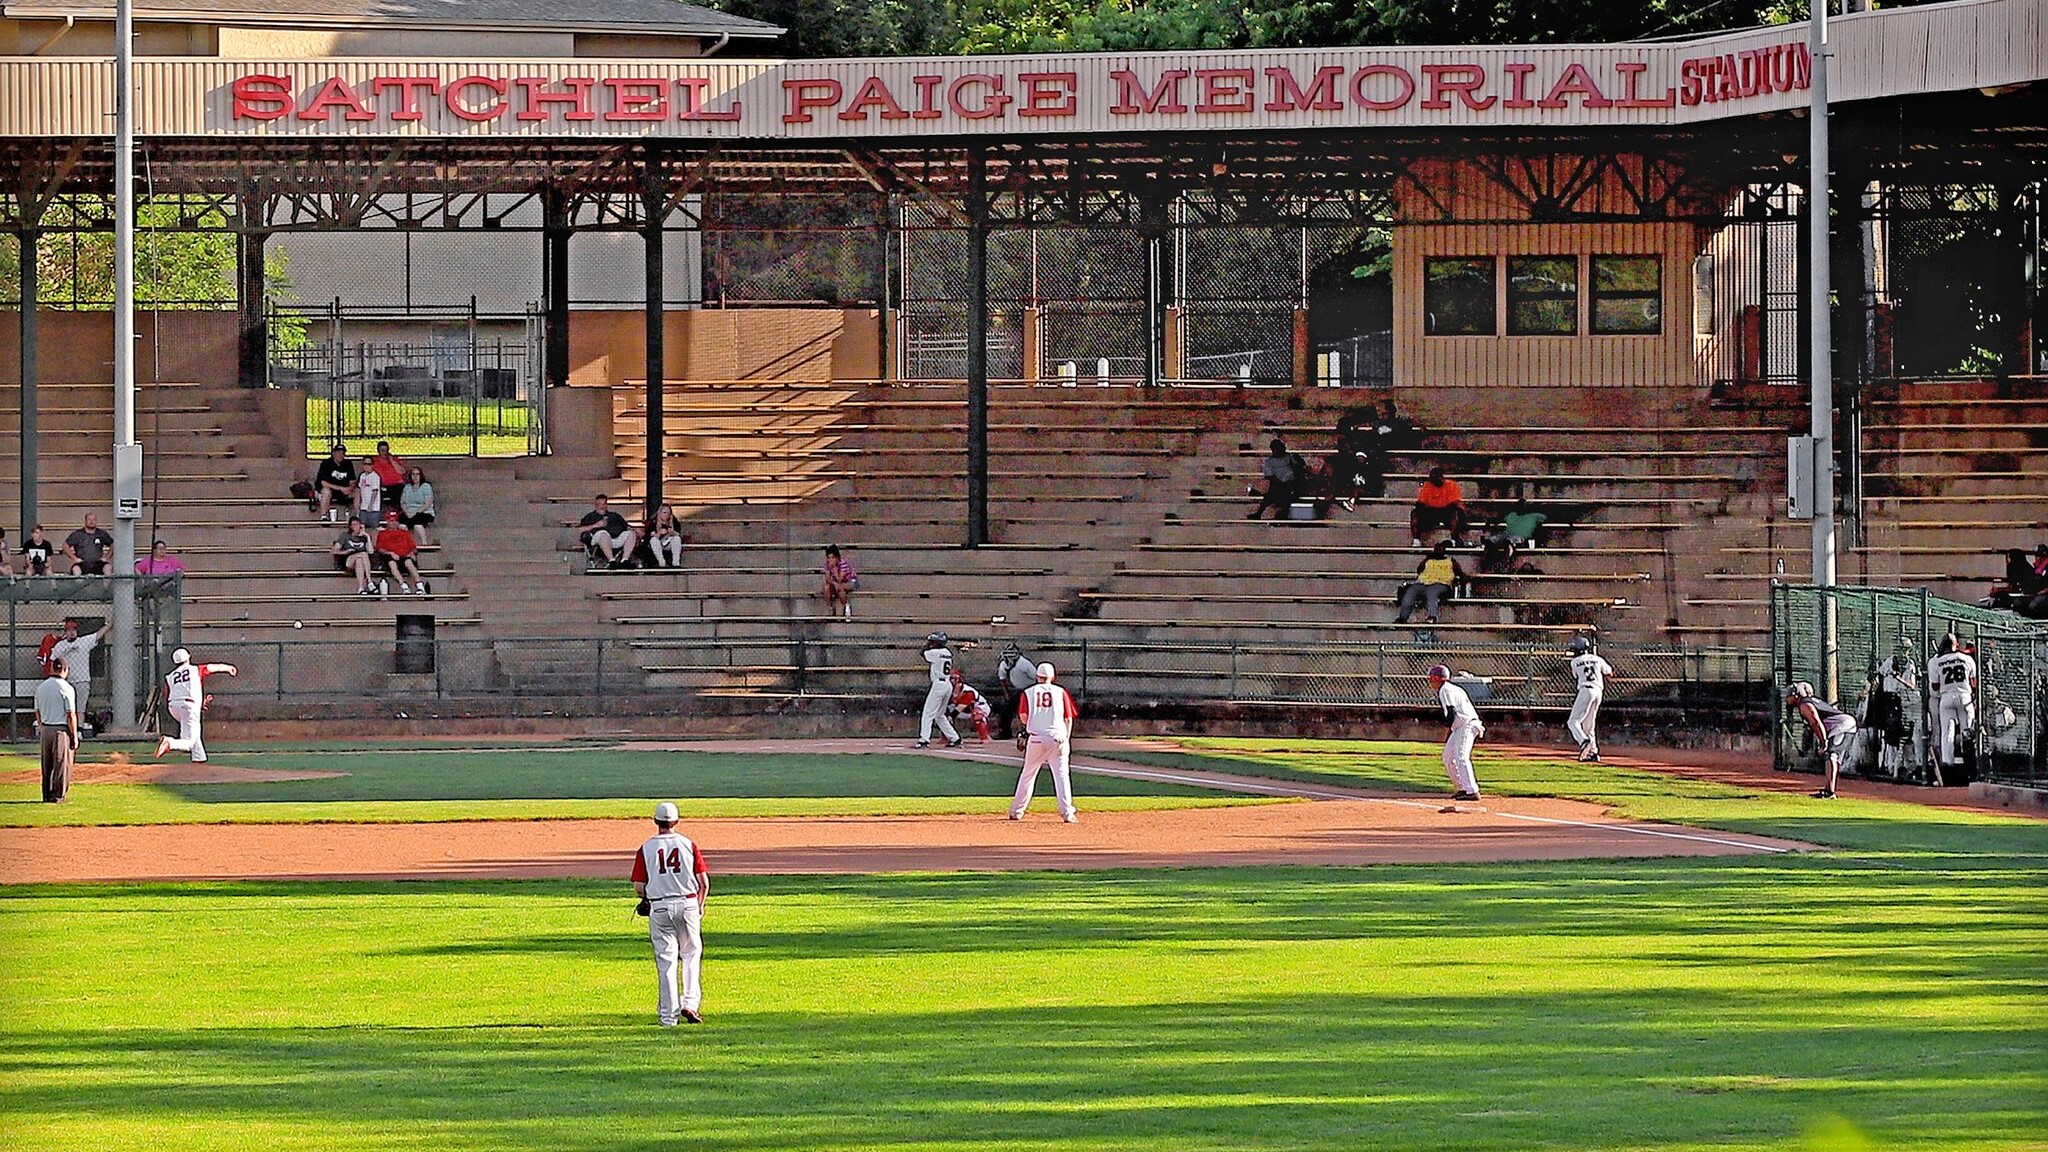 People playing baseball at Satchel Paige Memorial Stadium